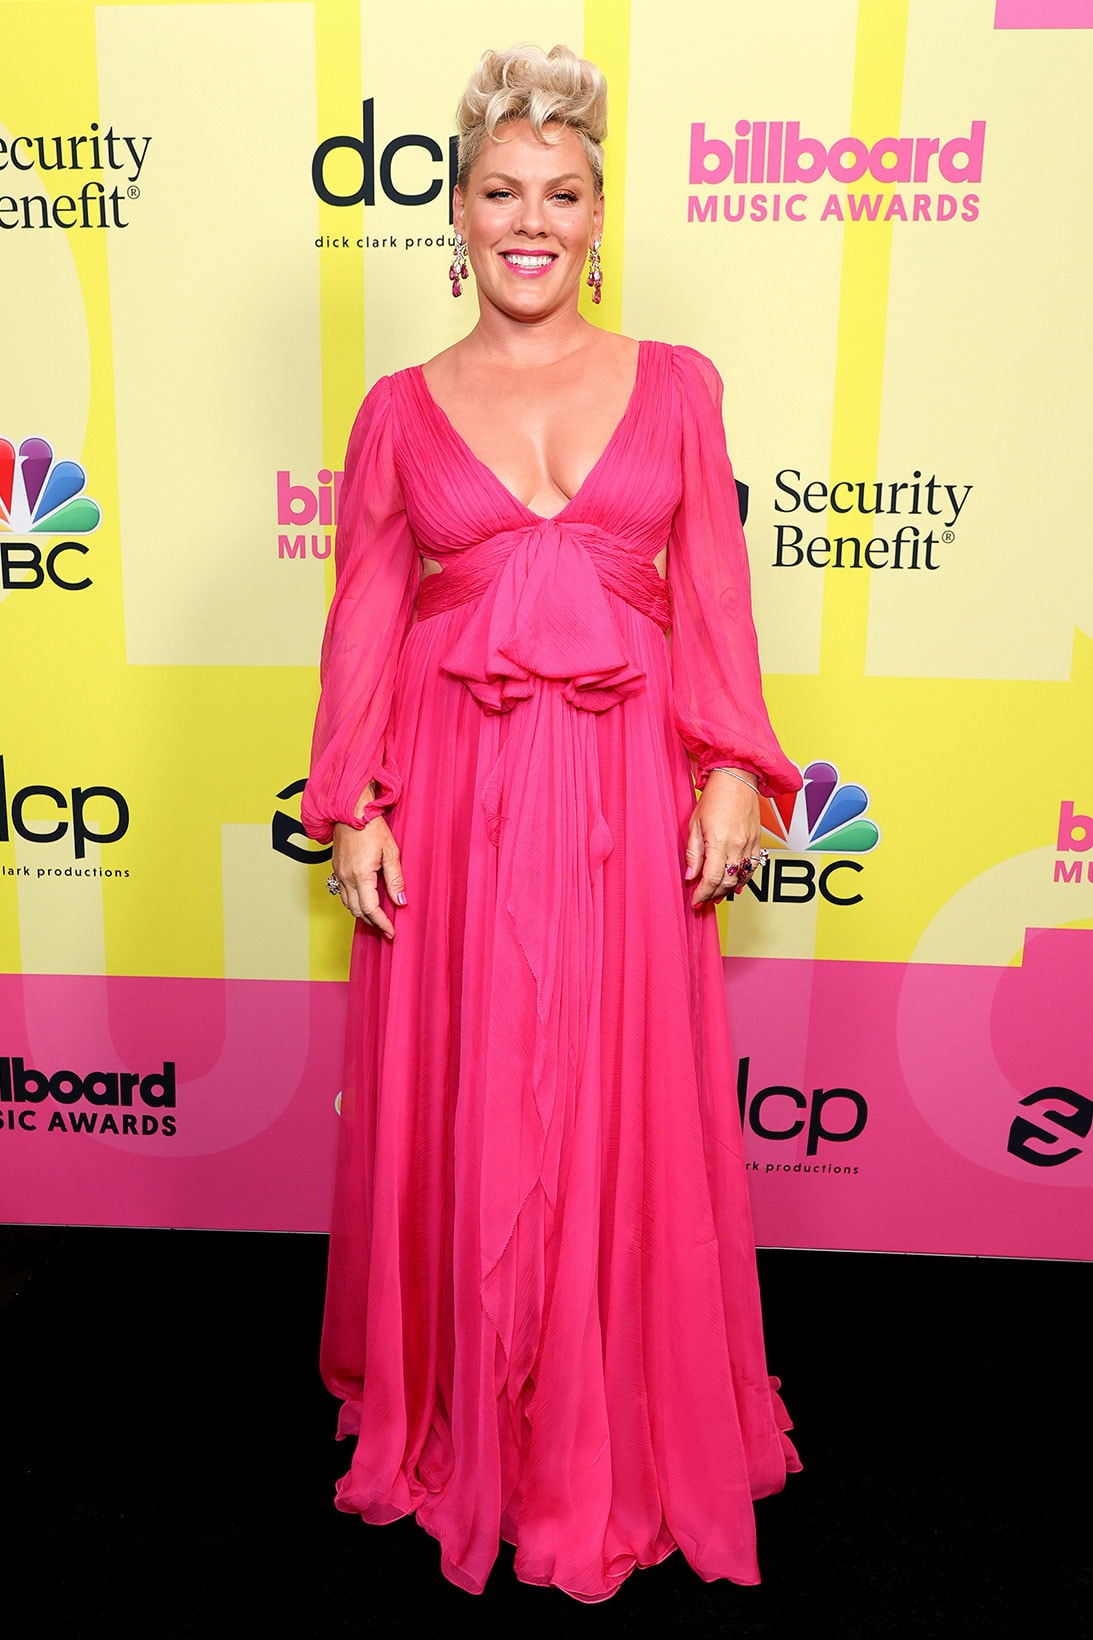 billboard music awards bbma red carpet best dressed celebrity style pink